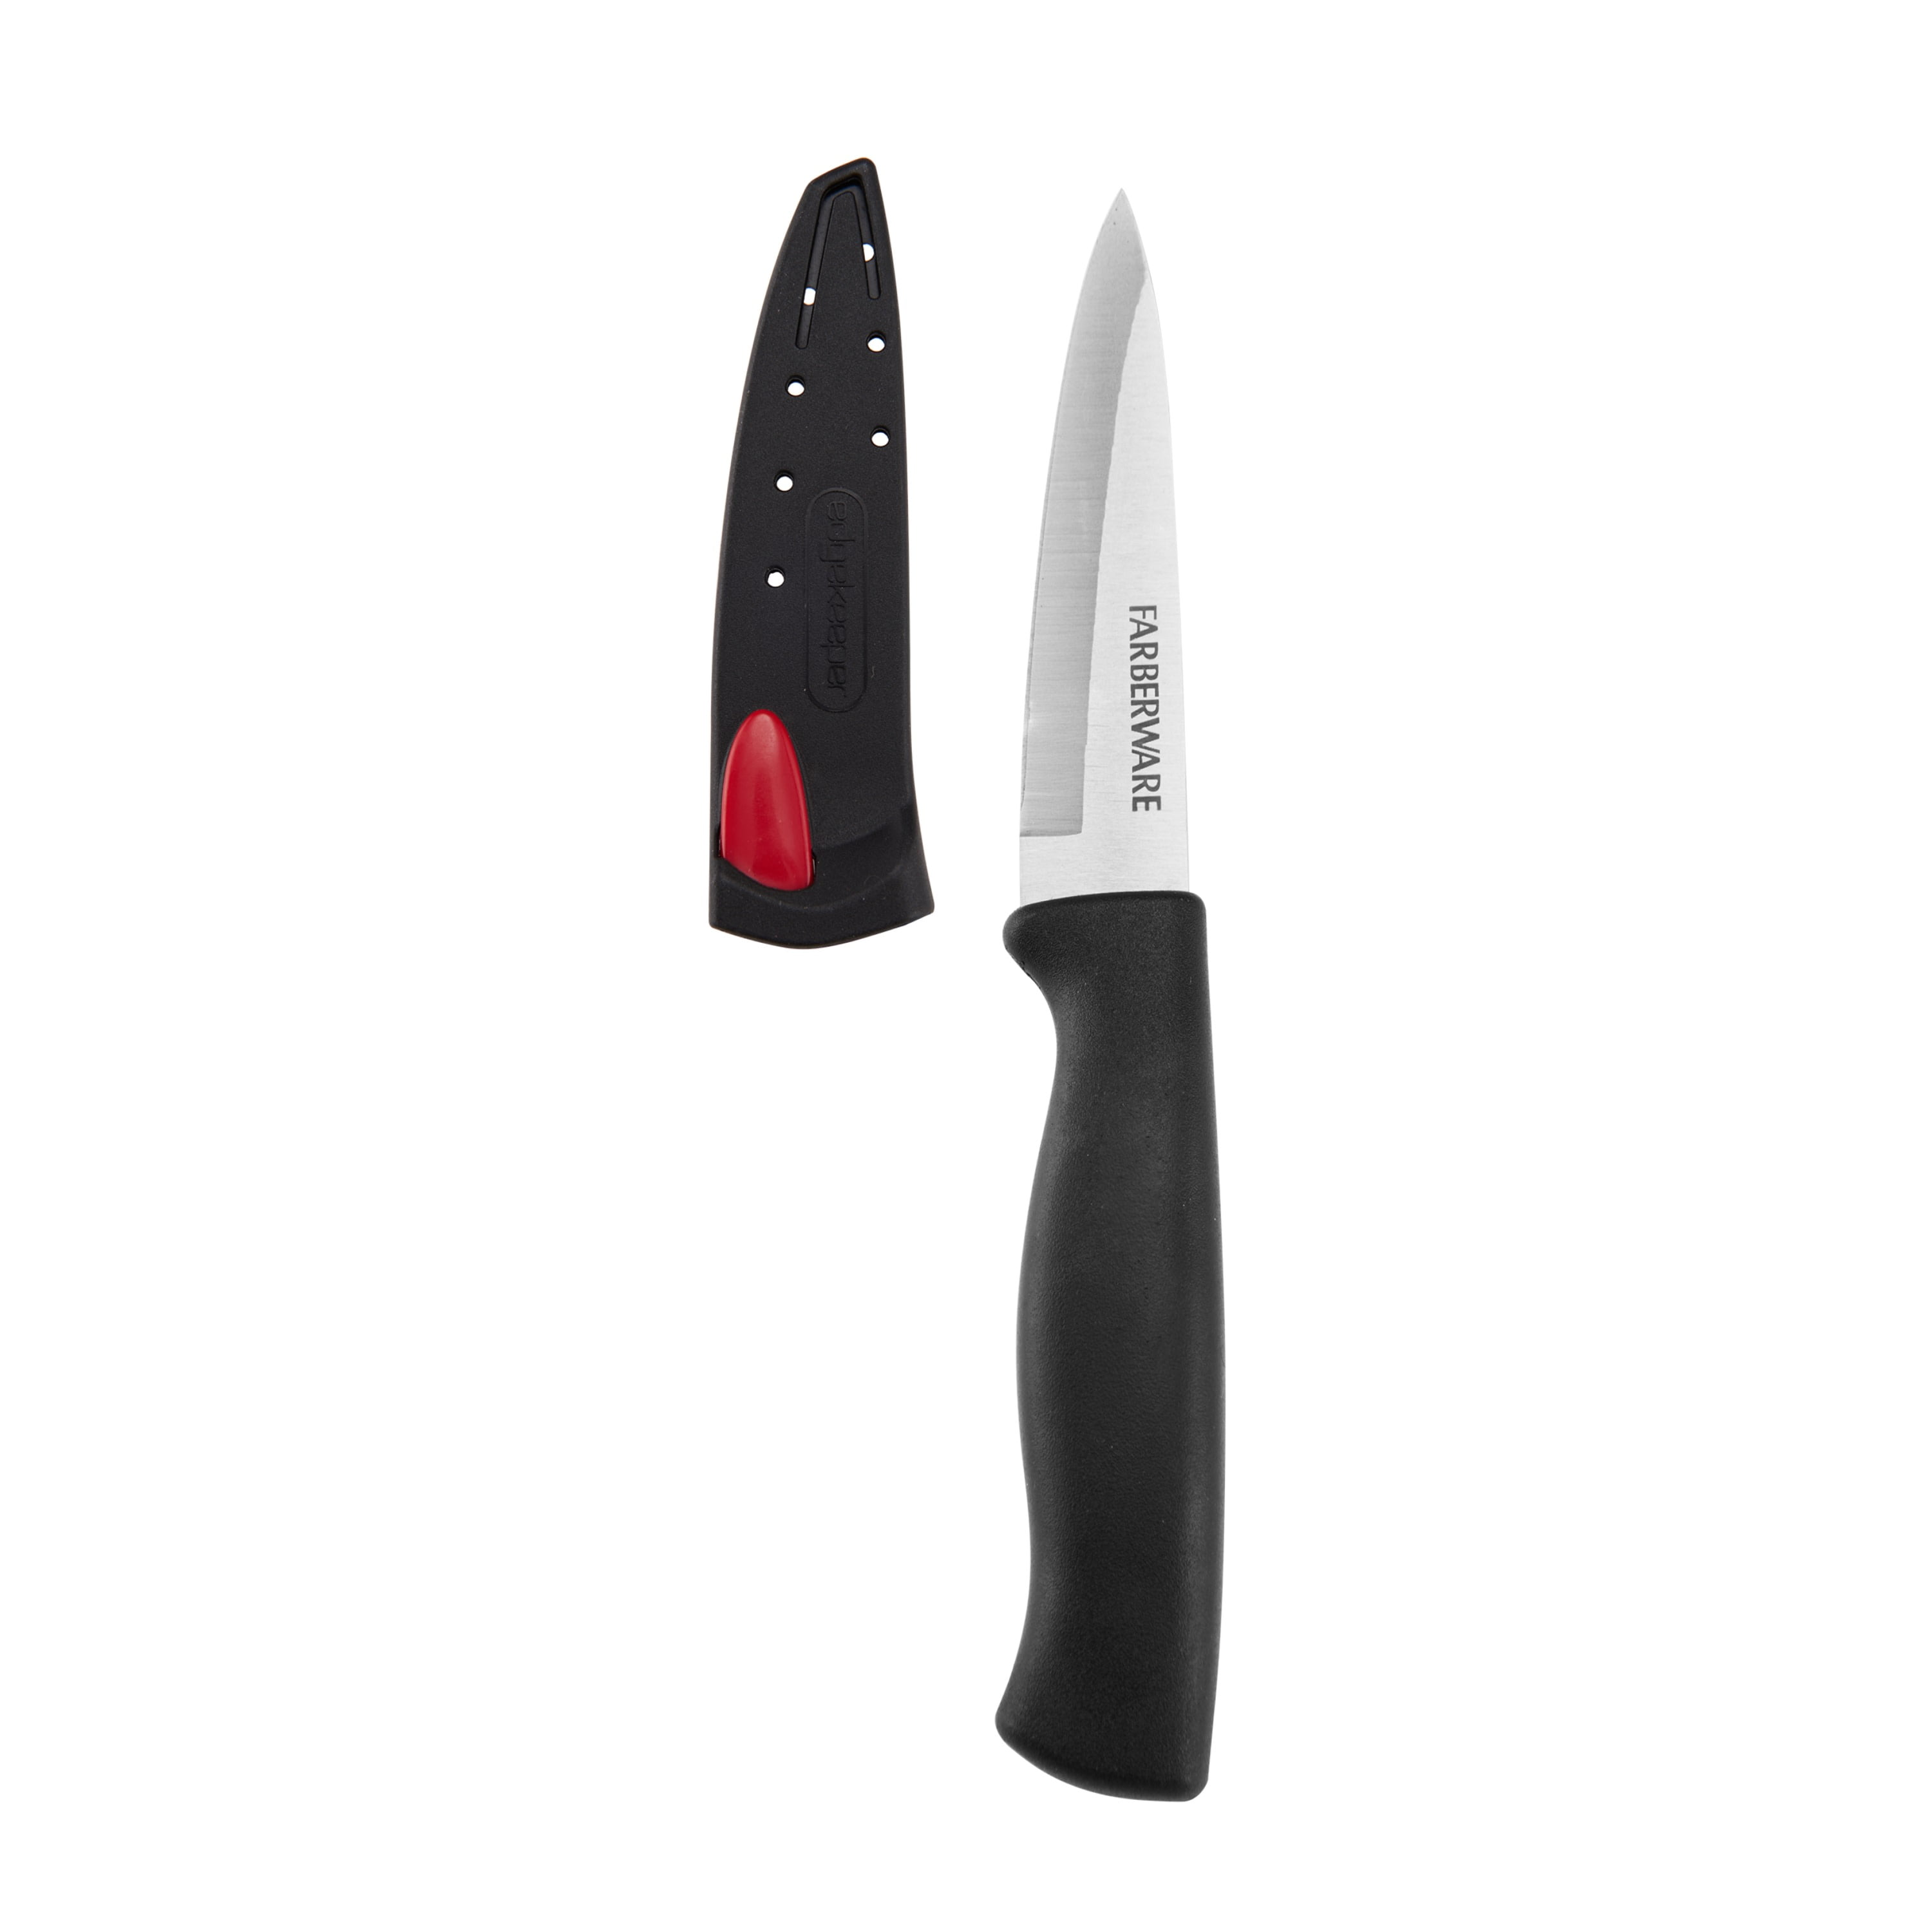 Farberware 3.5 In. Black Paring Knife with Edgekeeper Sheath - Gillman Home  Center